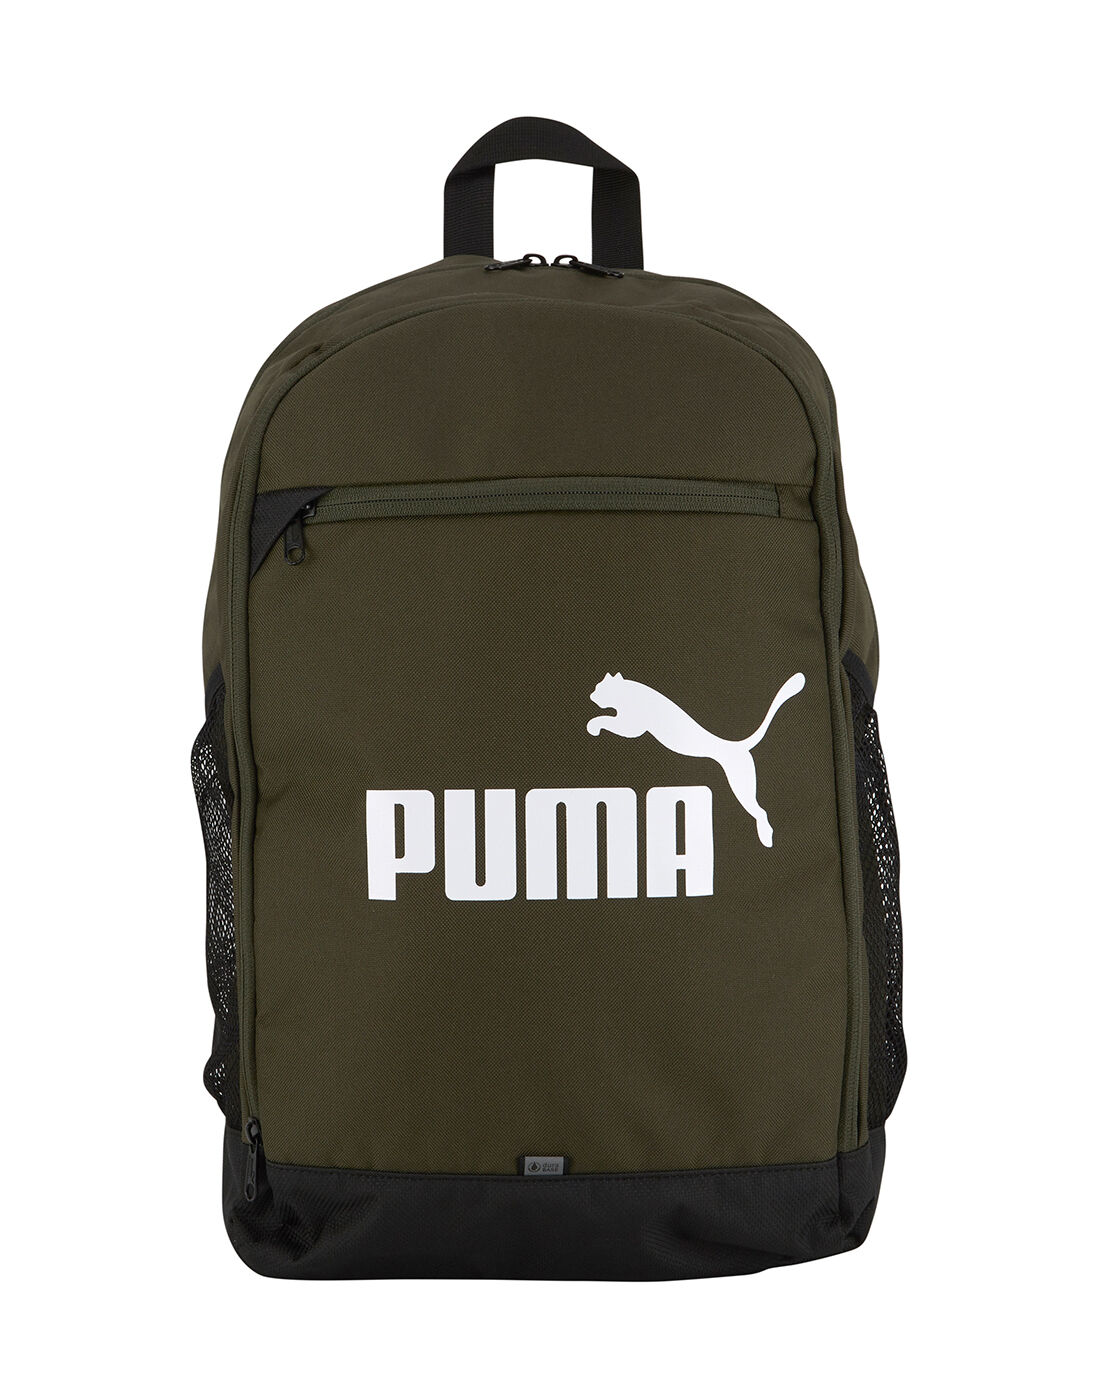 Green Puma School Bag | Life Style Sports